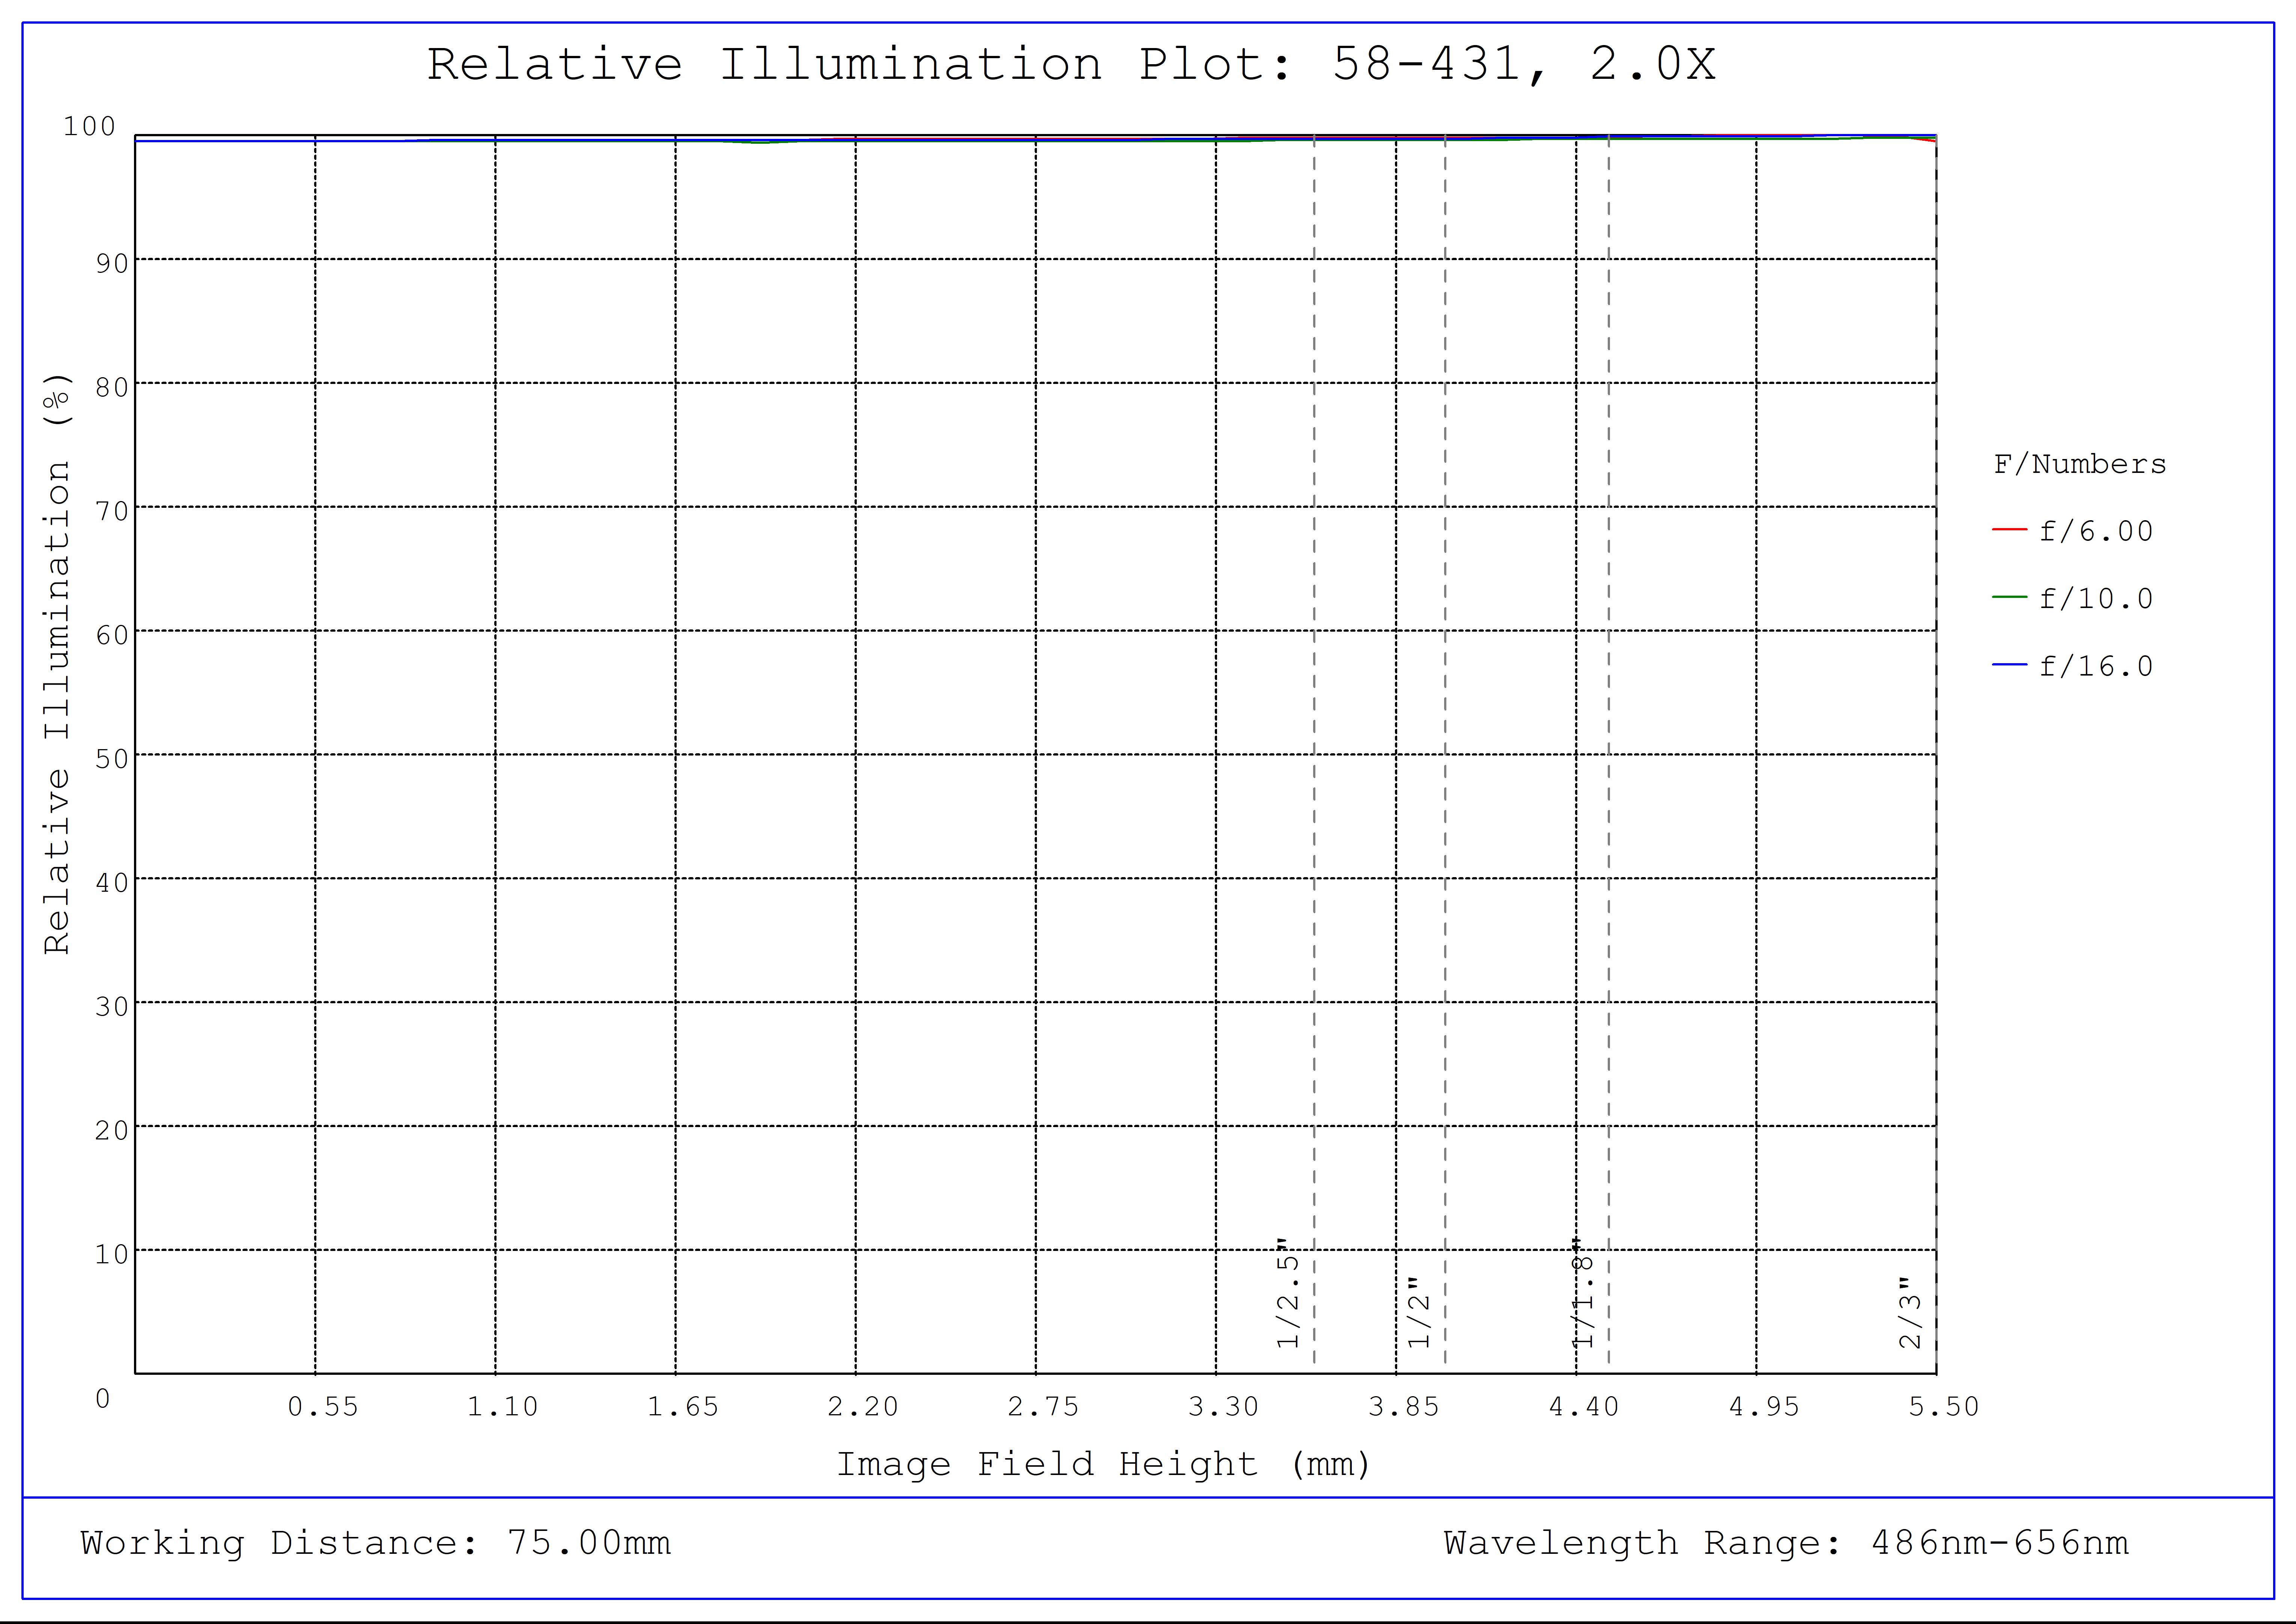 #58-431, 2.0X SilverTL™ Telecentric Lens, Relative Illumination Plot